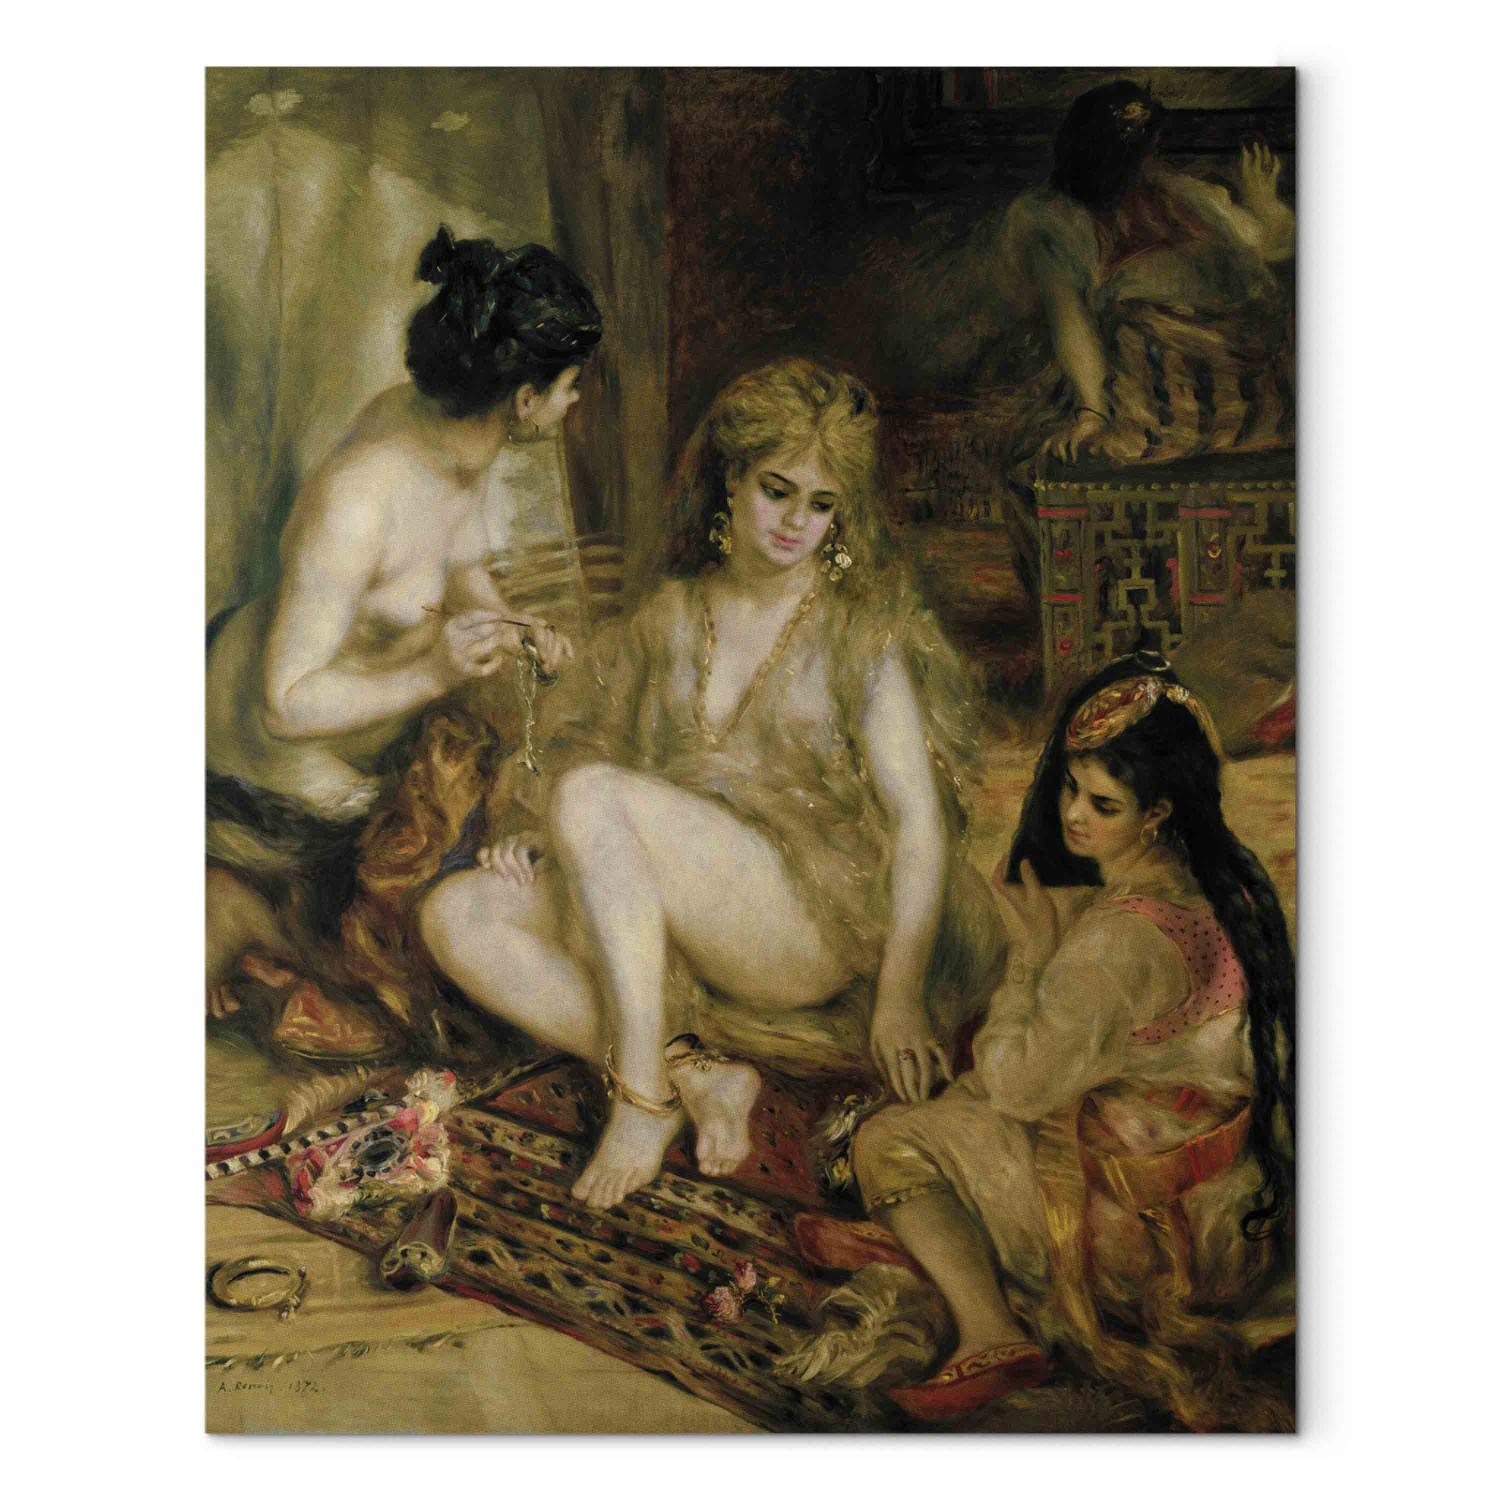 Canvas Interior of a Harem in Montmartre, Parisian women dressed as Algerians